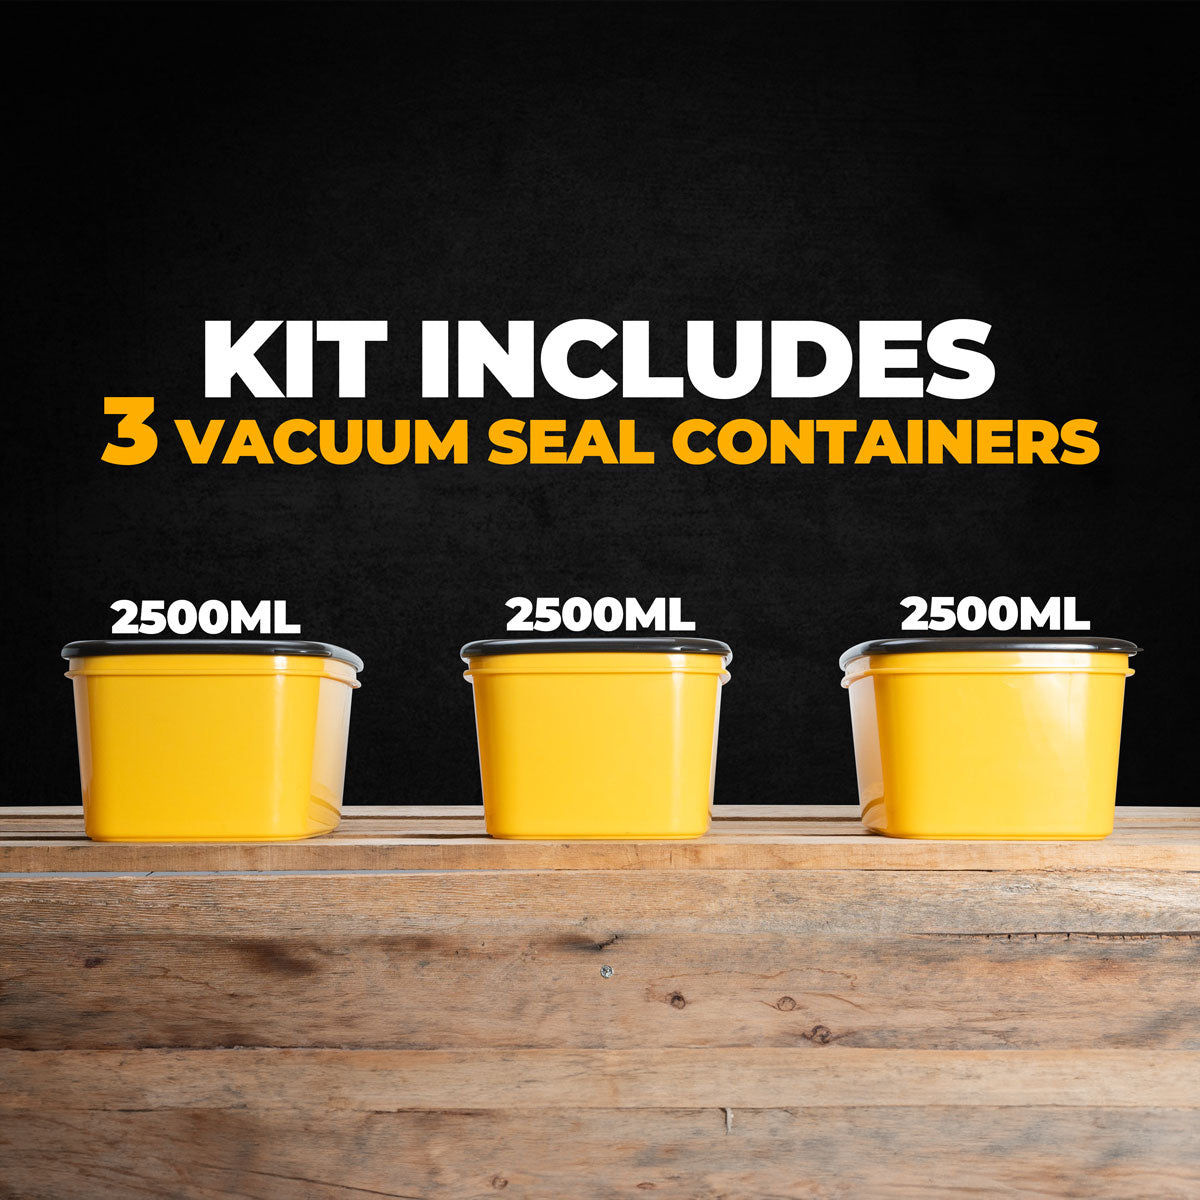 2500ml Reusable Crib Container Set